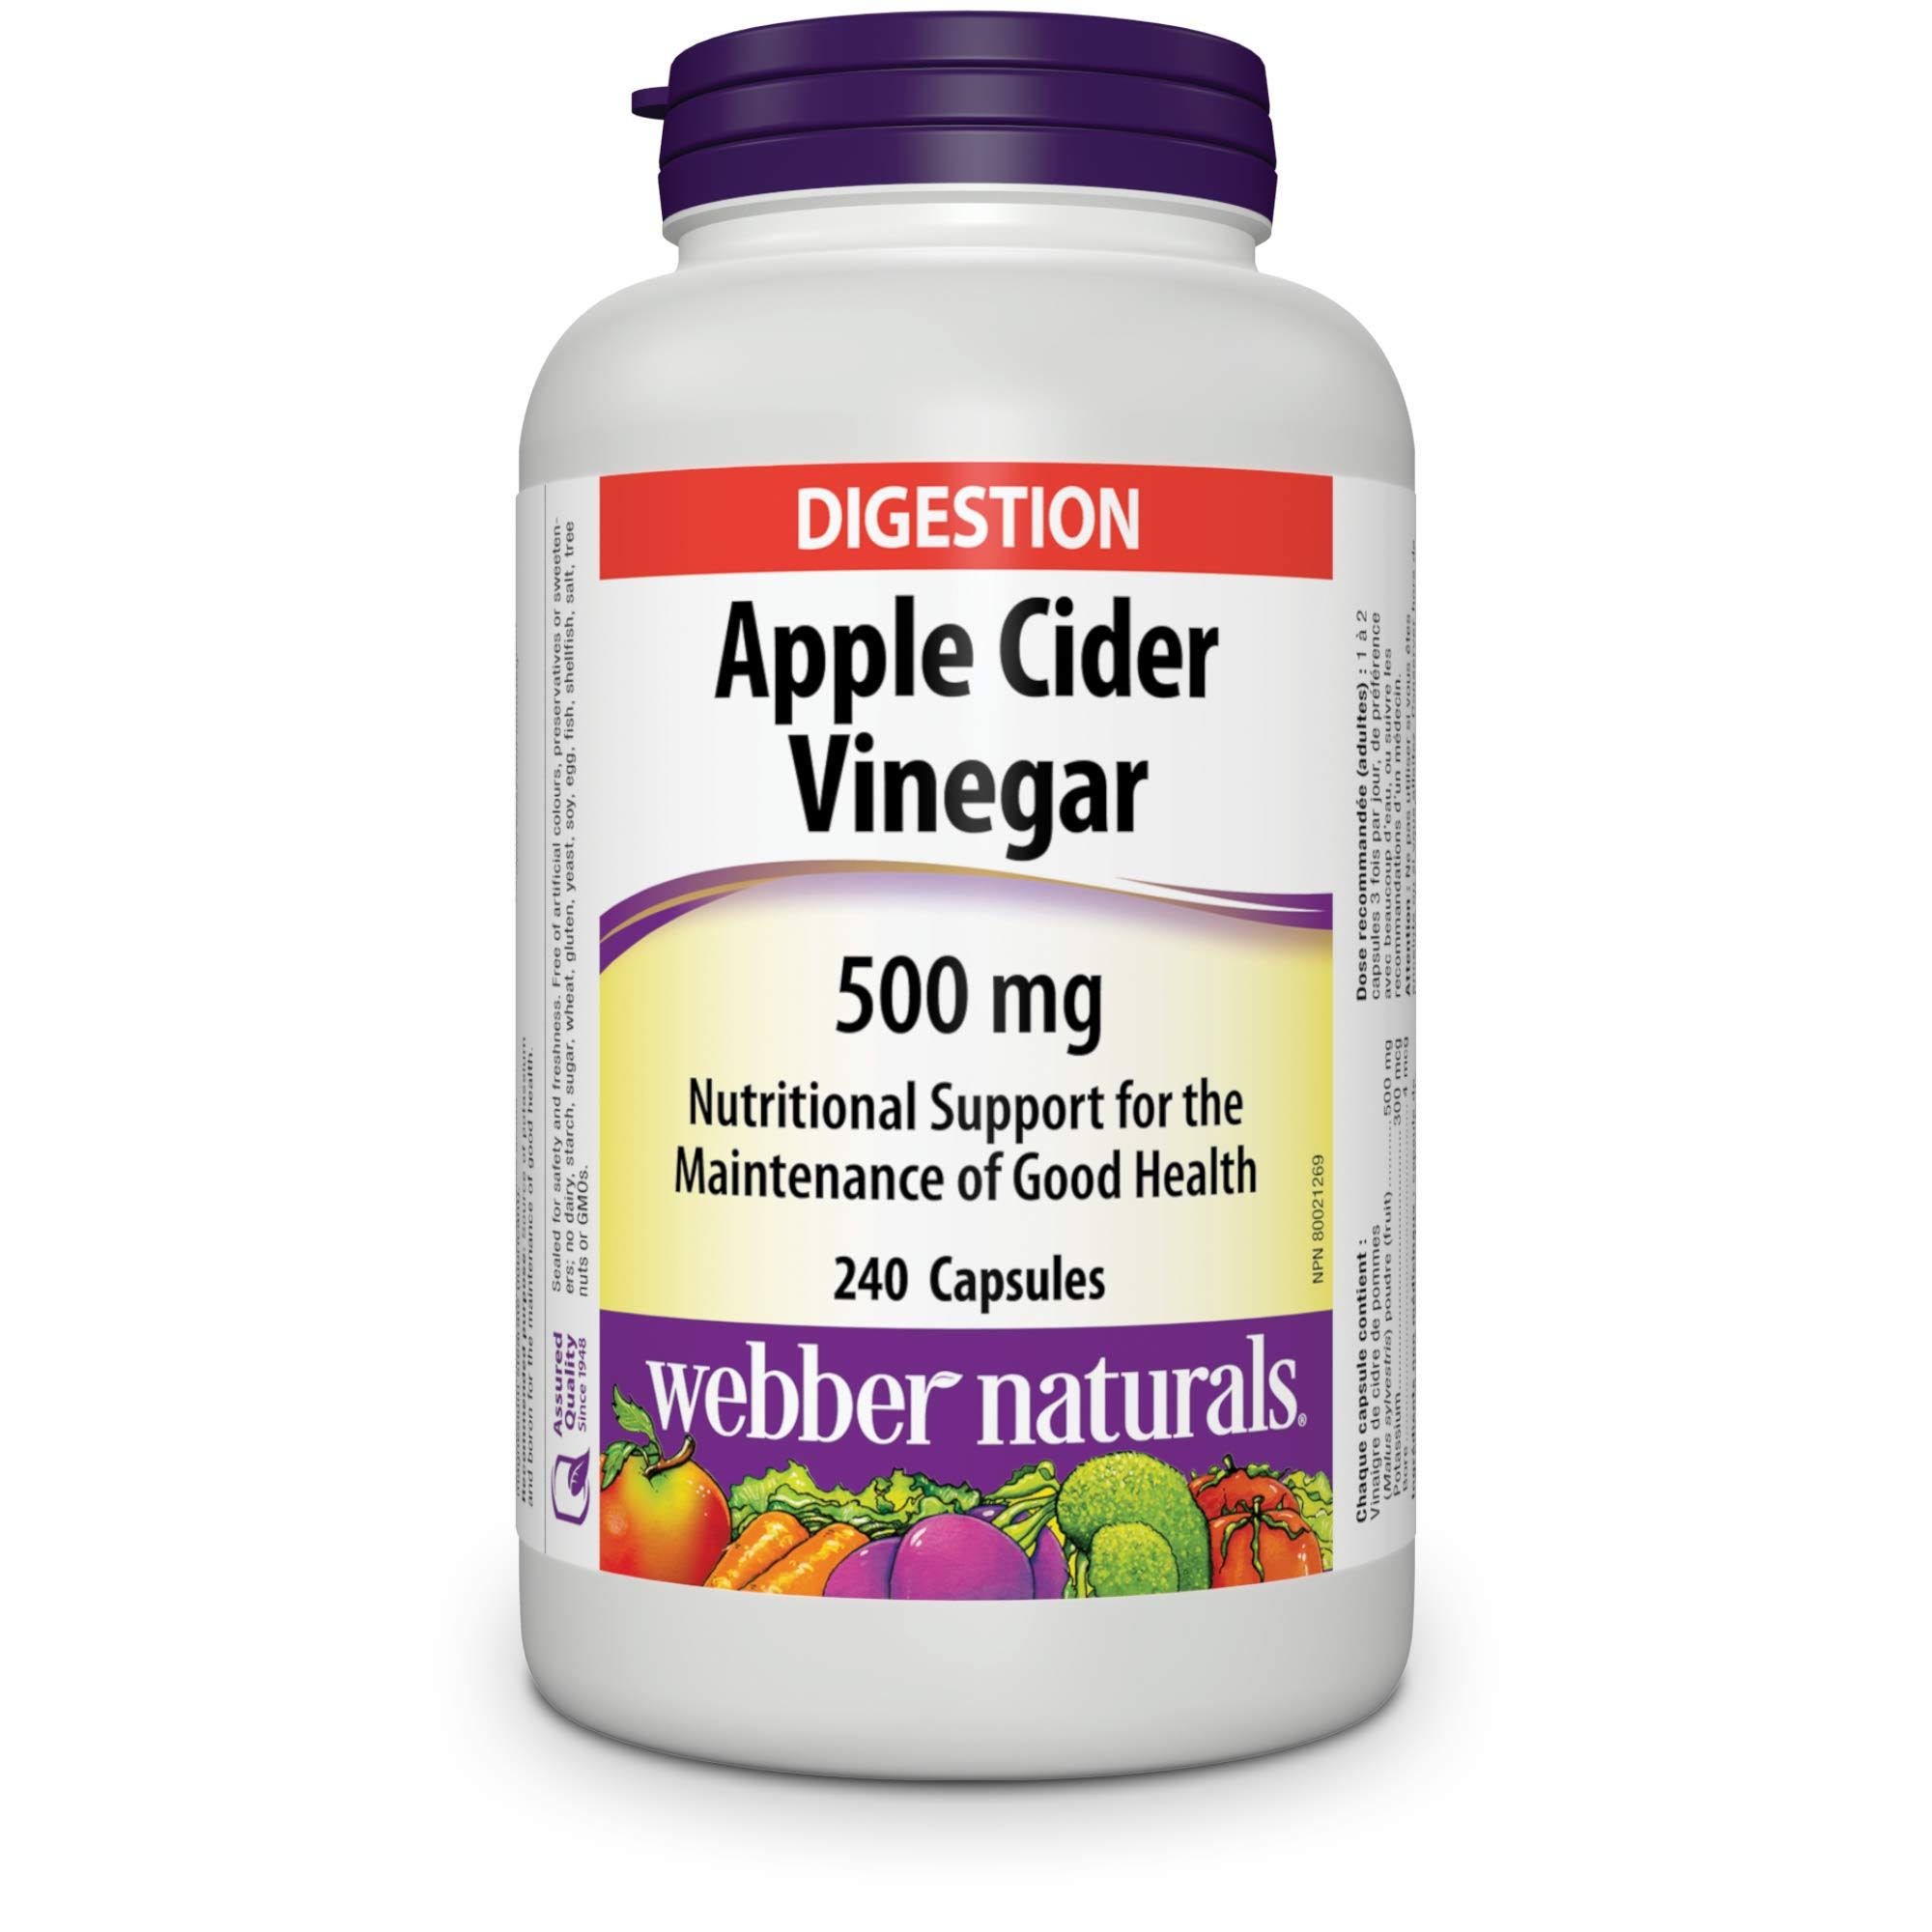 Webber Naturals Apple Cider Vinegar Dietary Supplement - 500mg, 240ct